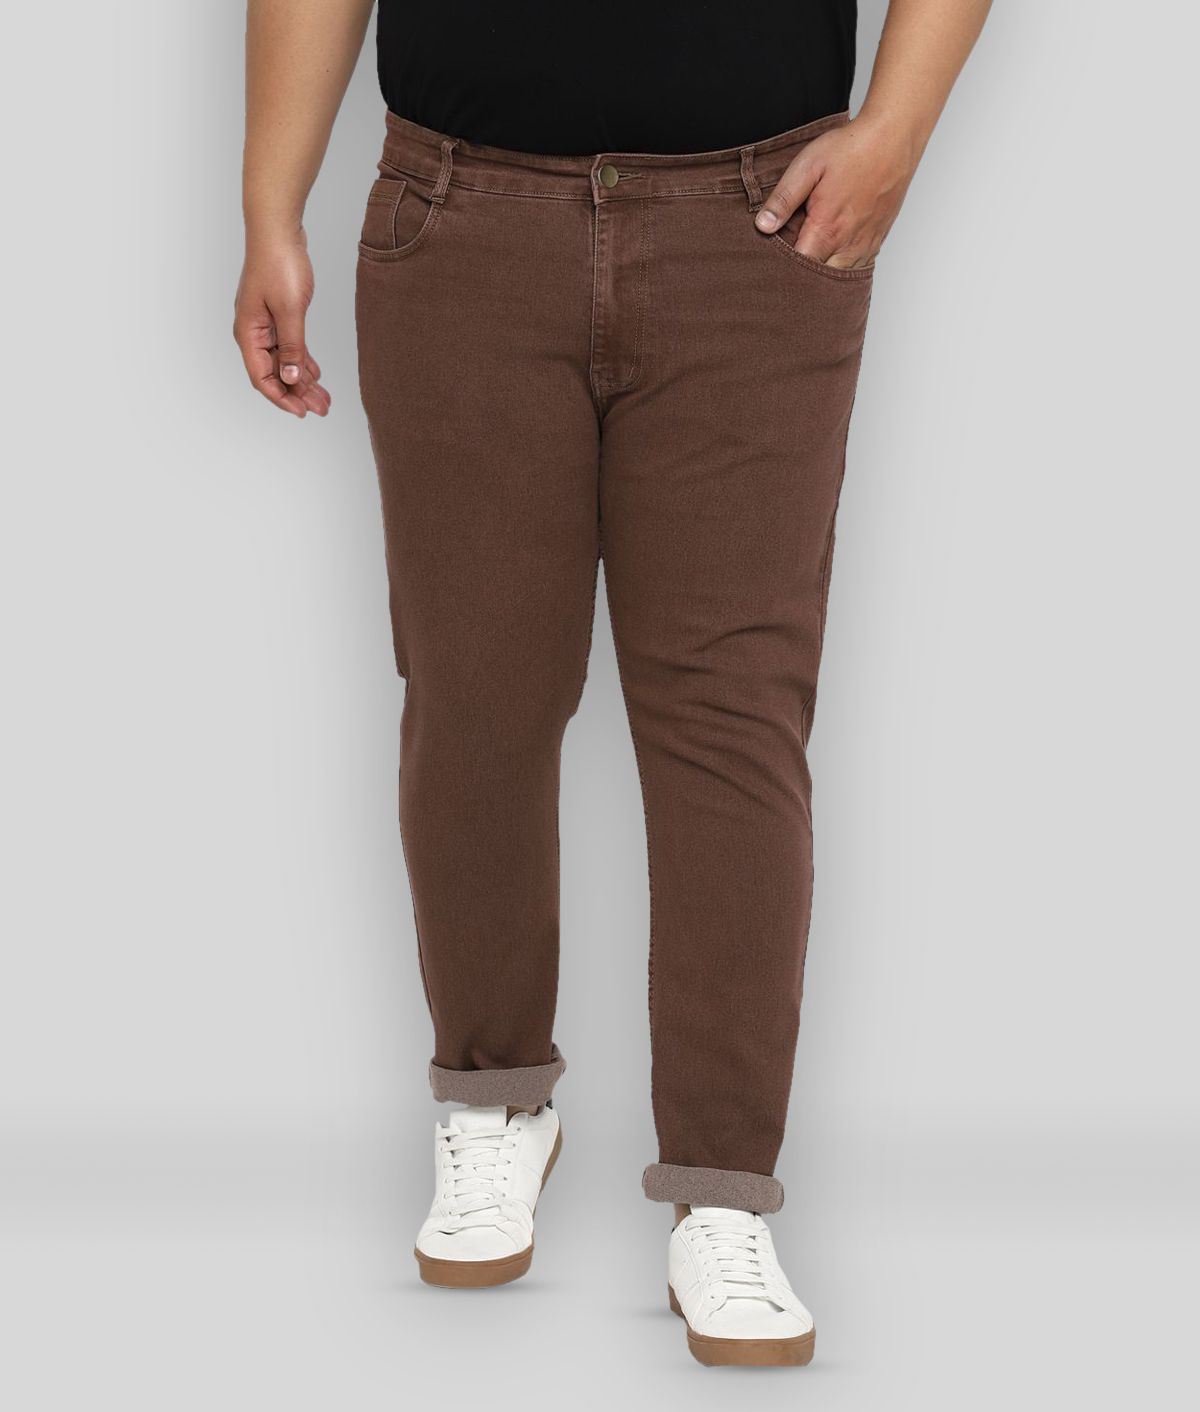     			Urbano Plus - Brown Cotton Blend Regular Fit Men's Jeans ( Pack of 1 )